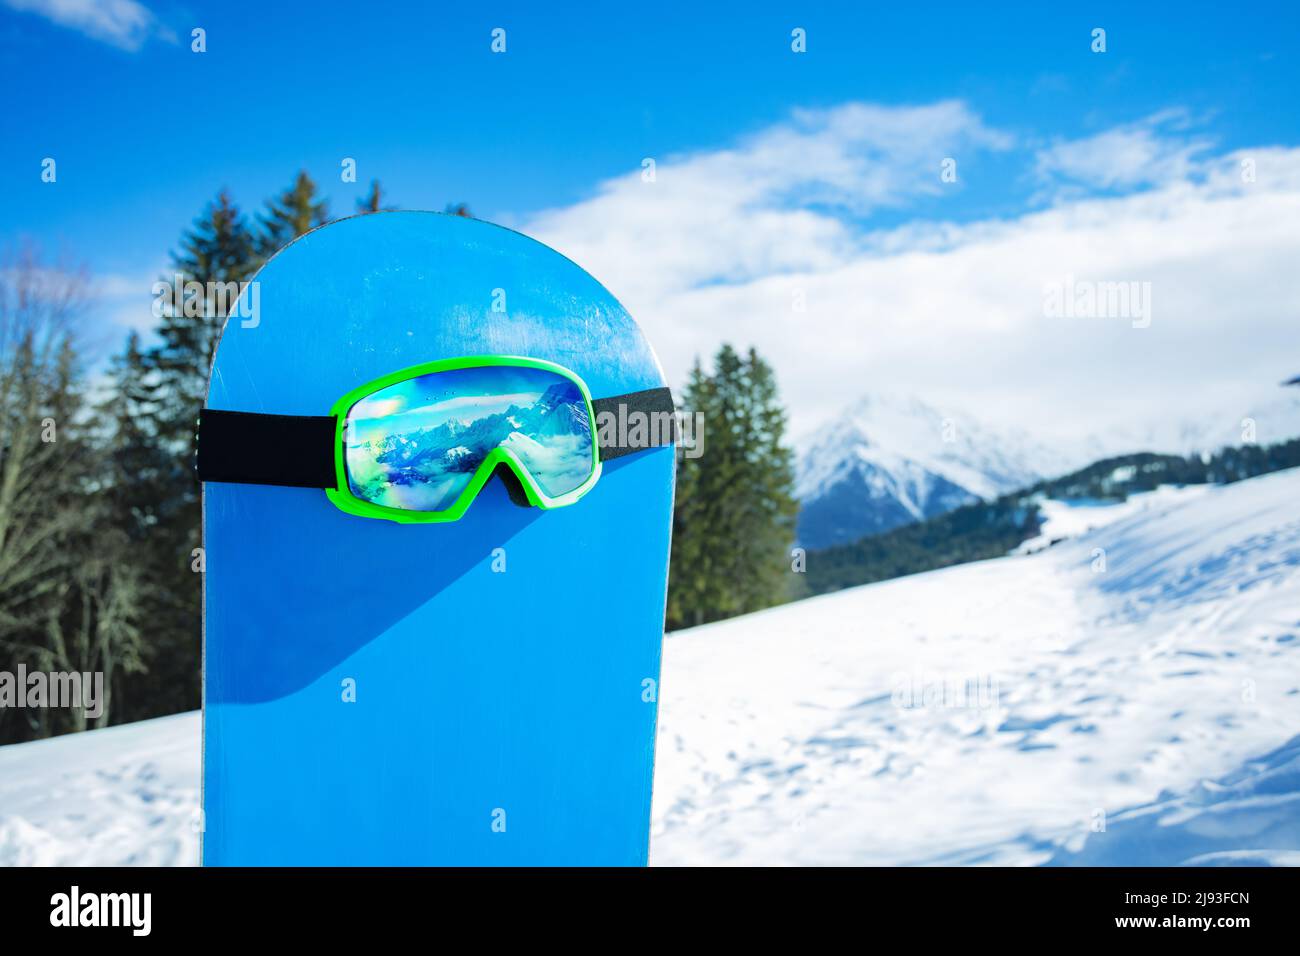 Alpine ski mask on the blue snowboard over mountain range Stock Photo